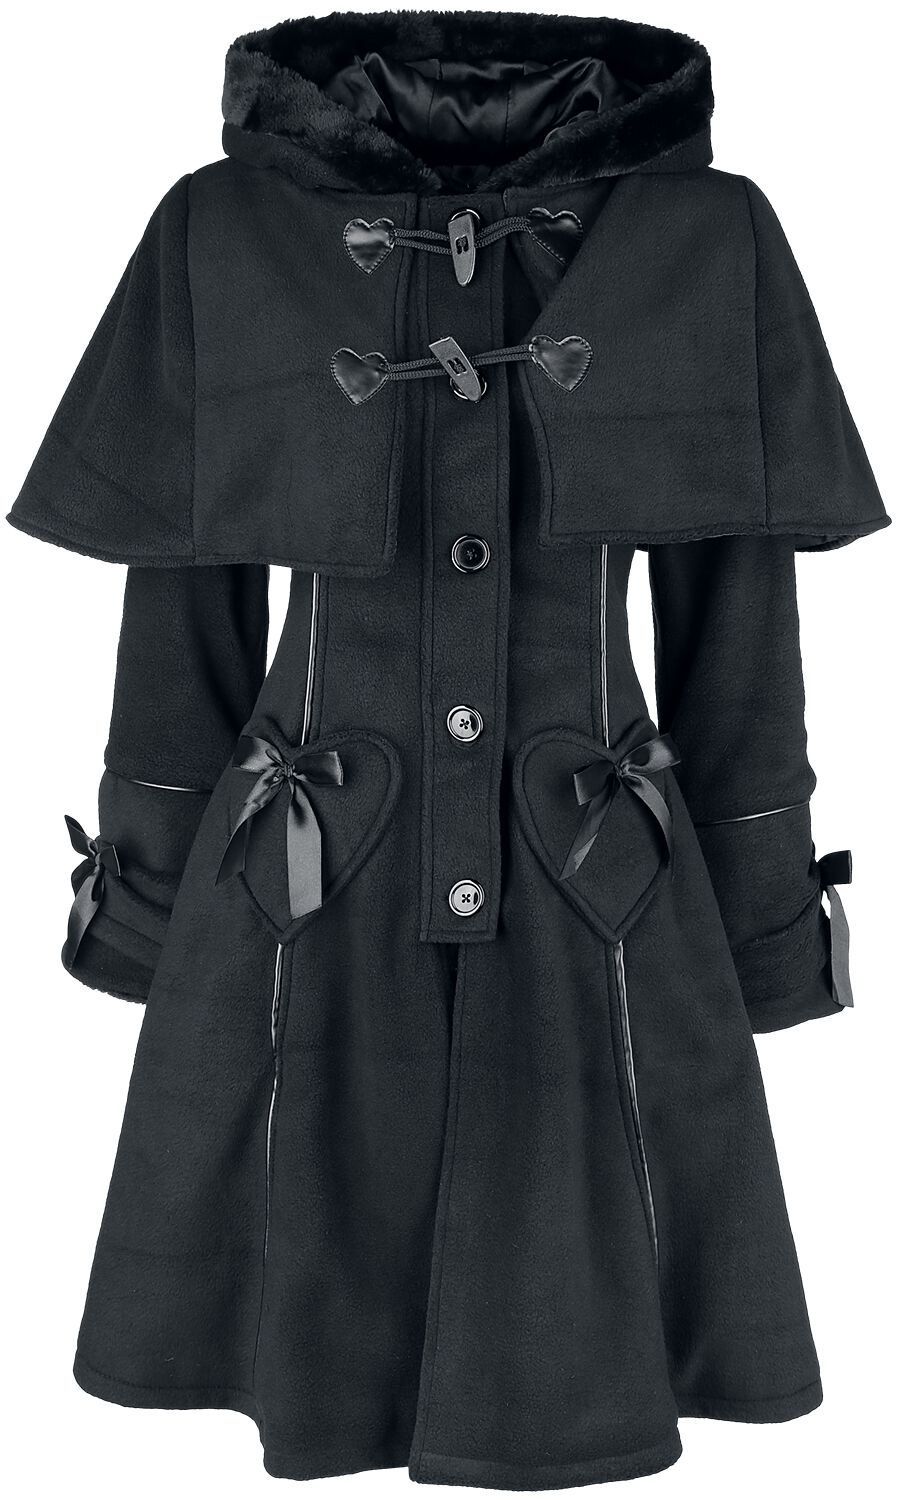 Poizen Industries Edelmina Coat Mantel schwarz in 3XL